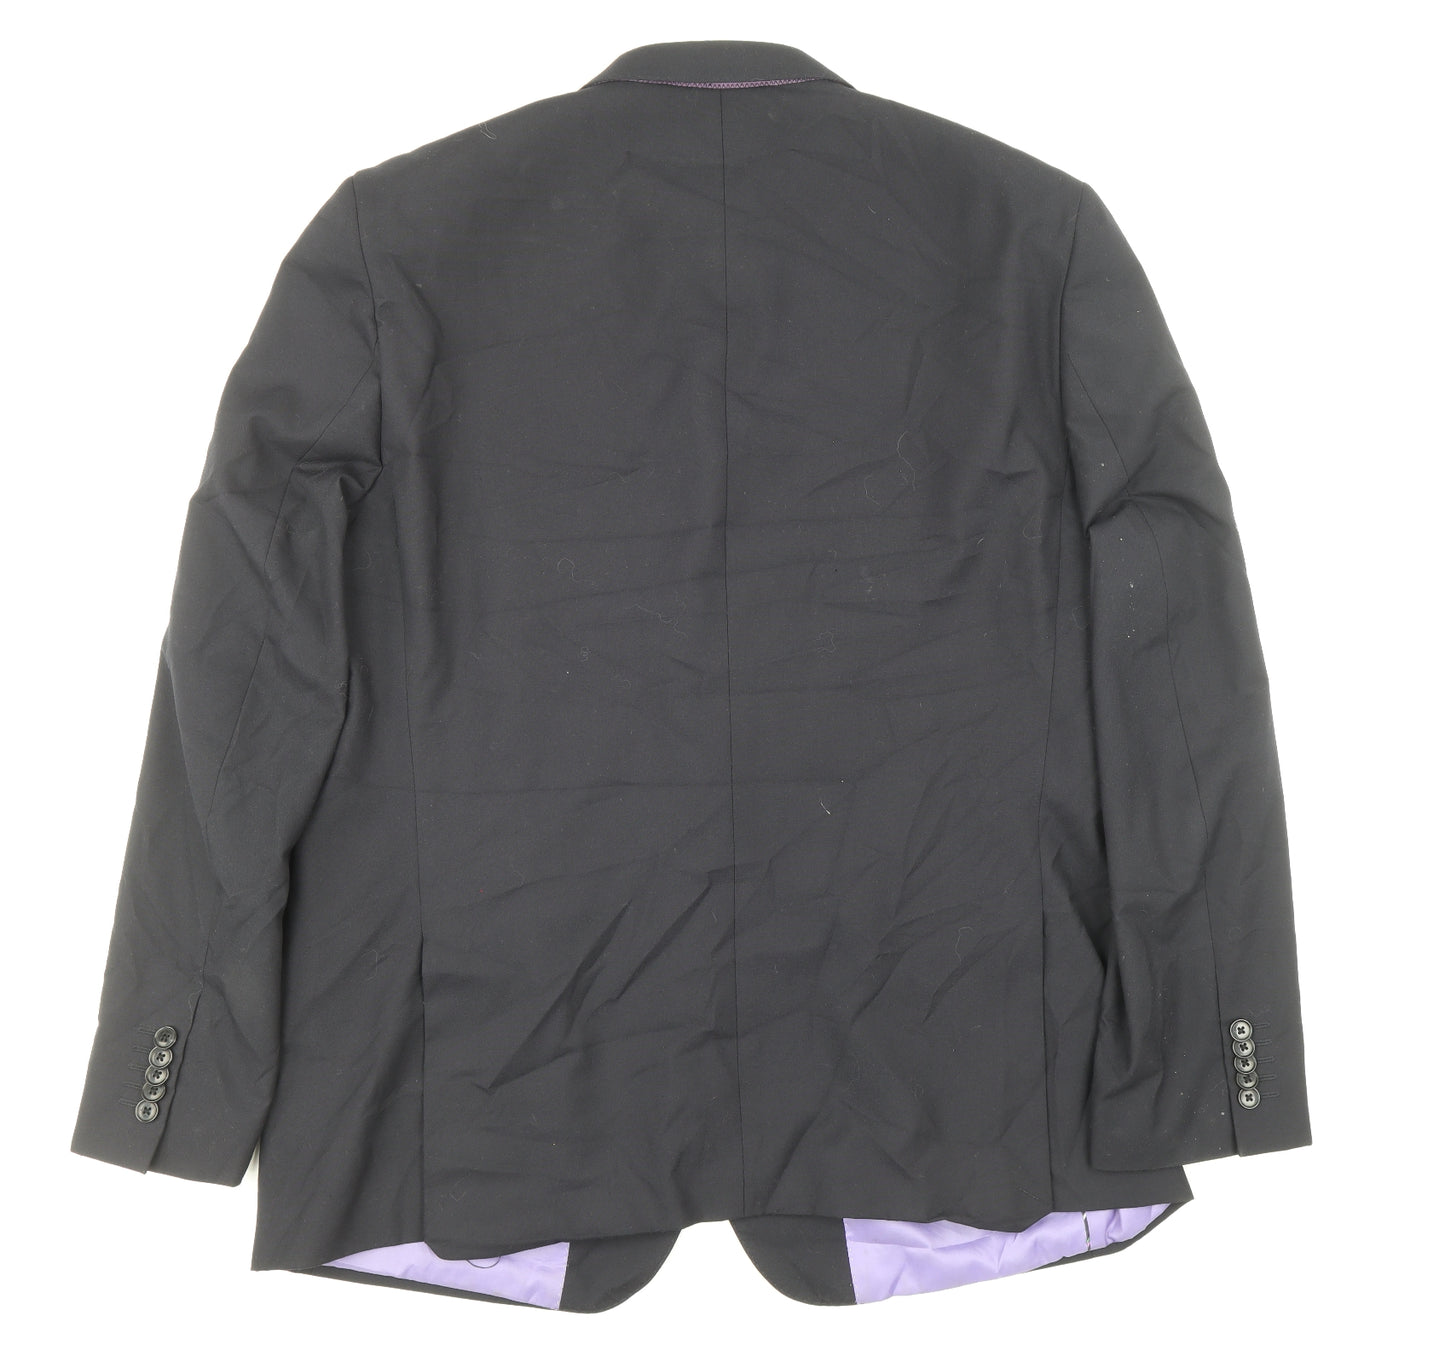 Harry Brown Mens Black Polyester Jacket Blazer Size 46